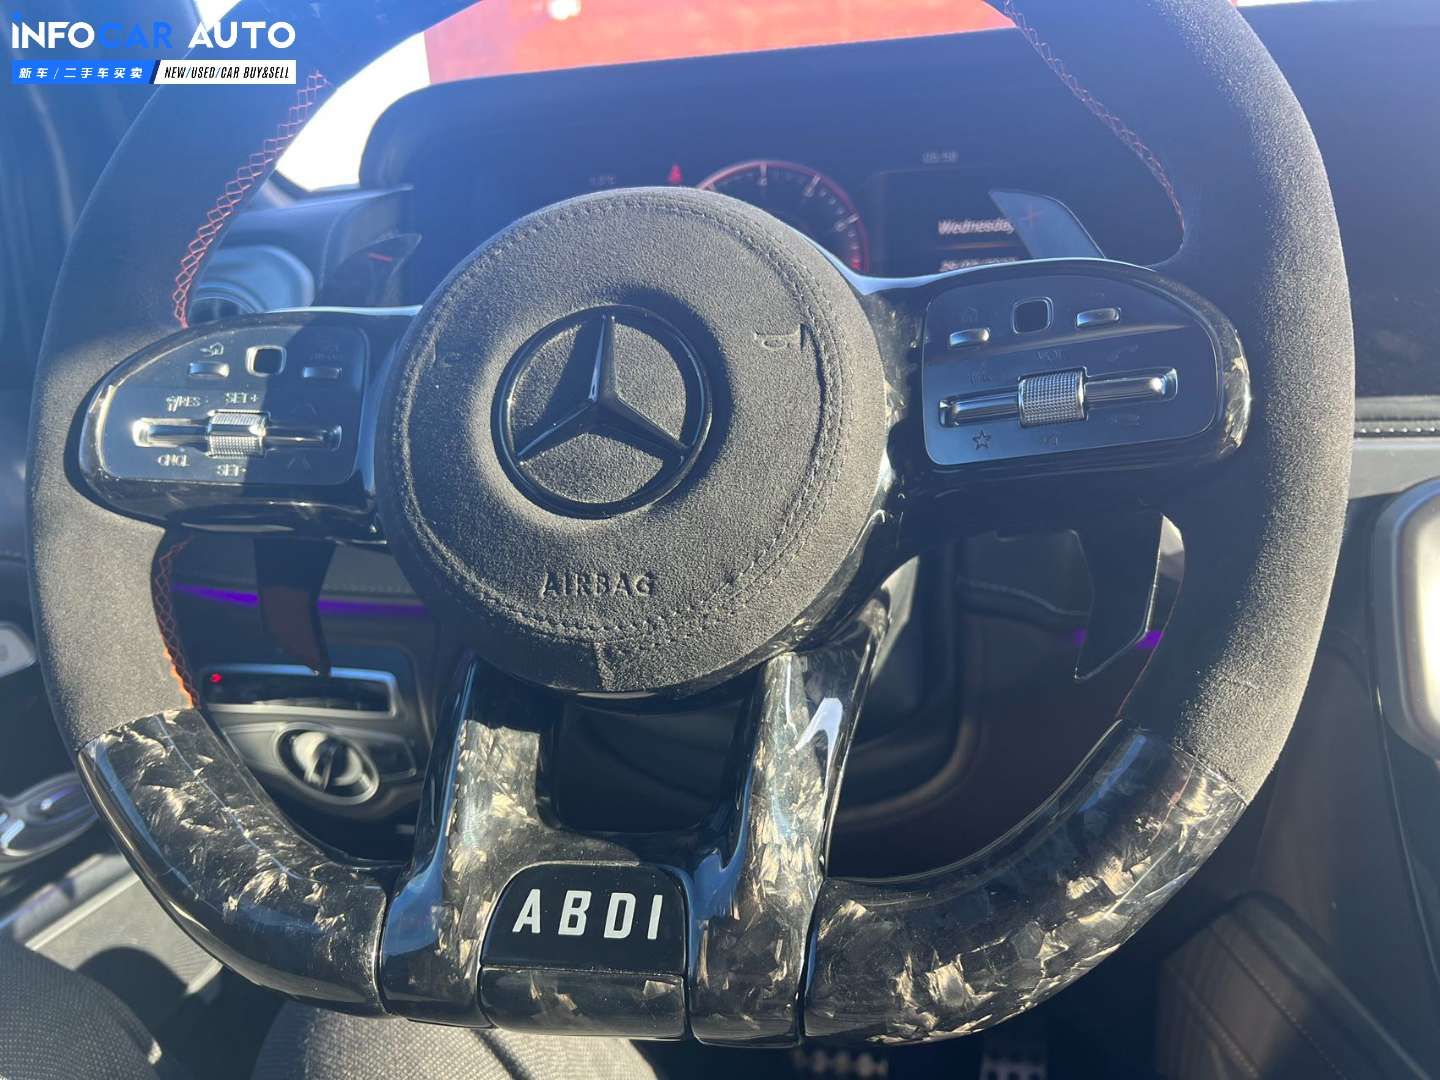 2019 Mercedes-Benz G-Class ABDI PROJECT G63 - INFOCAR - Toronto Auto Trading Platform